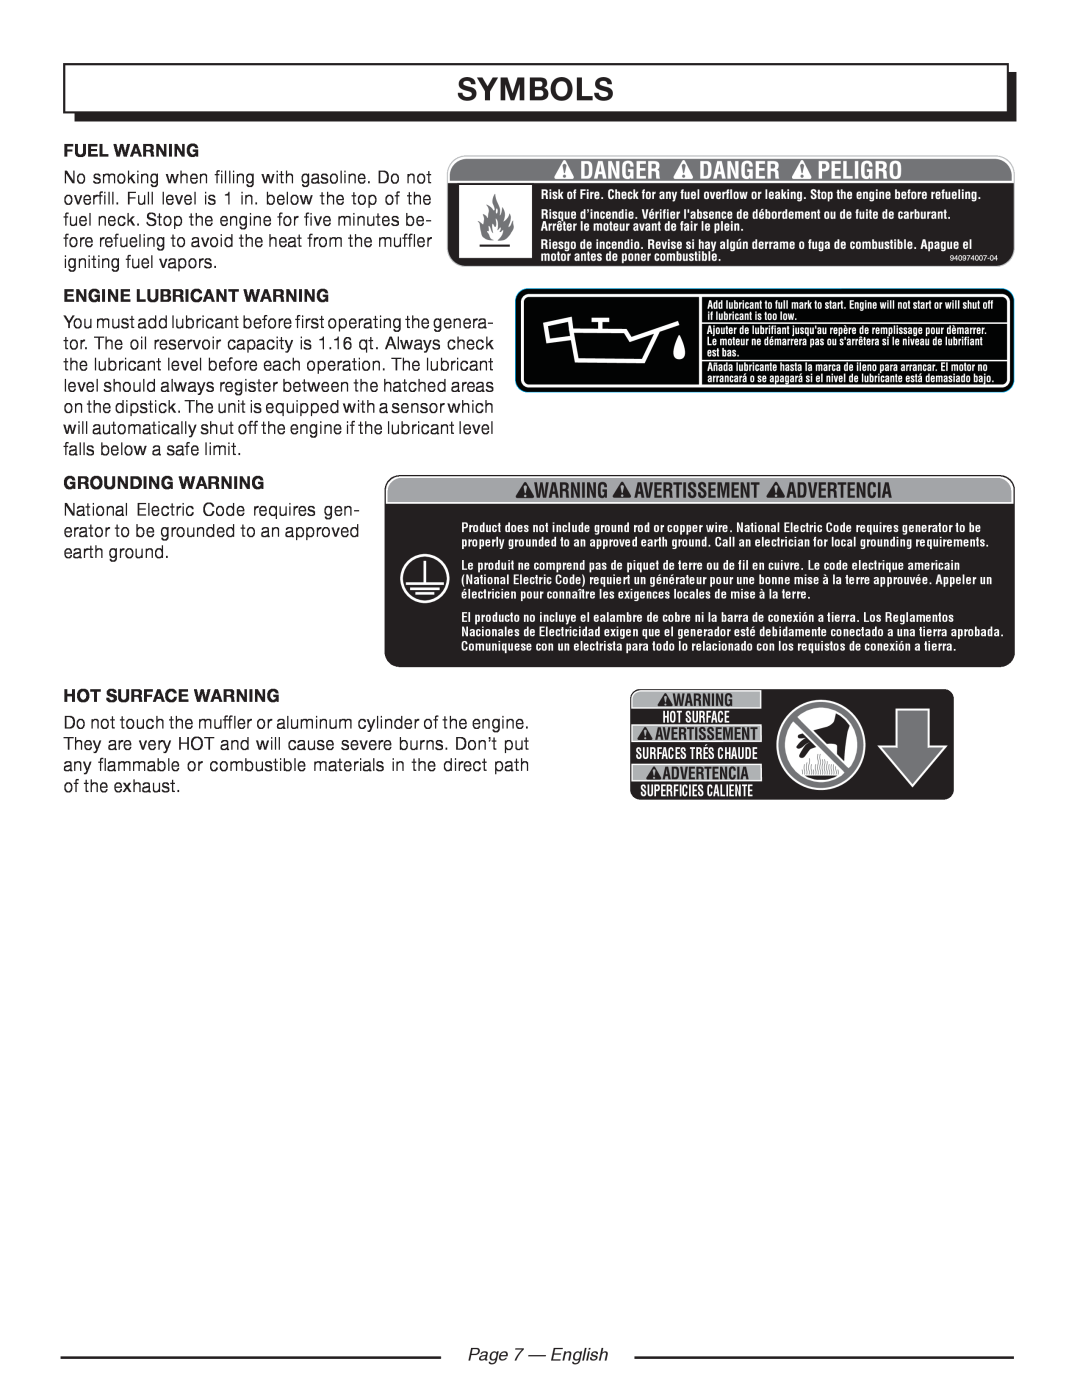 Homelite HGCA5000 Fuel Warning, Engine Lubricant Warning, Grounding Warning, Hot Surface Warning, Page 7 - English 